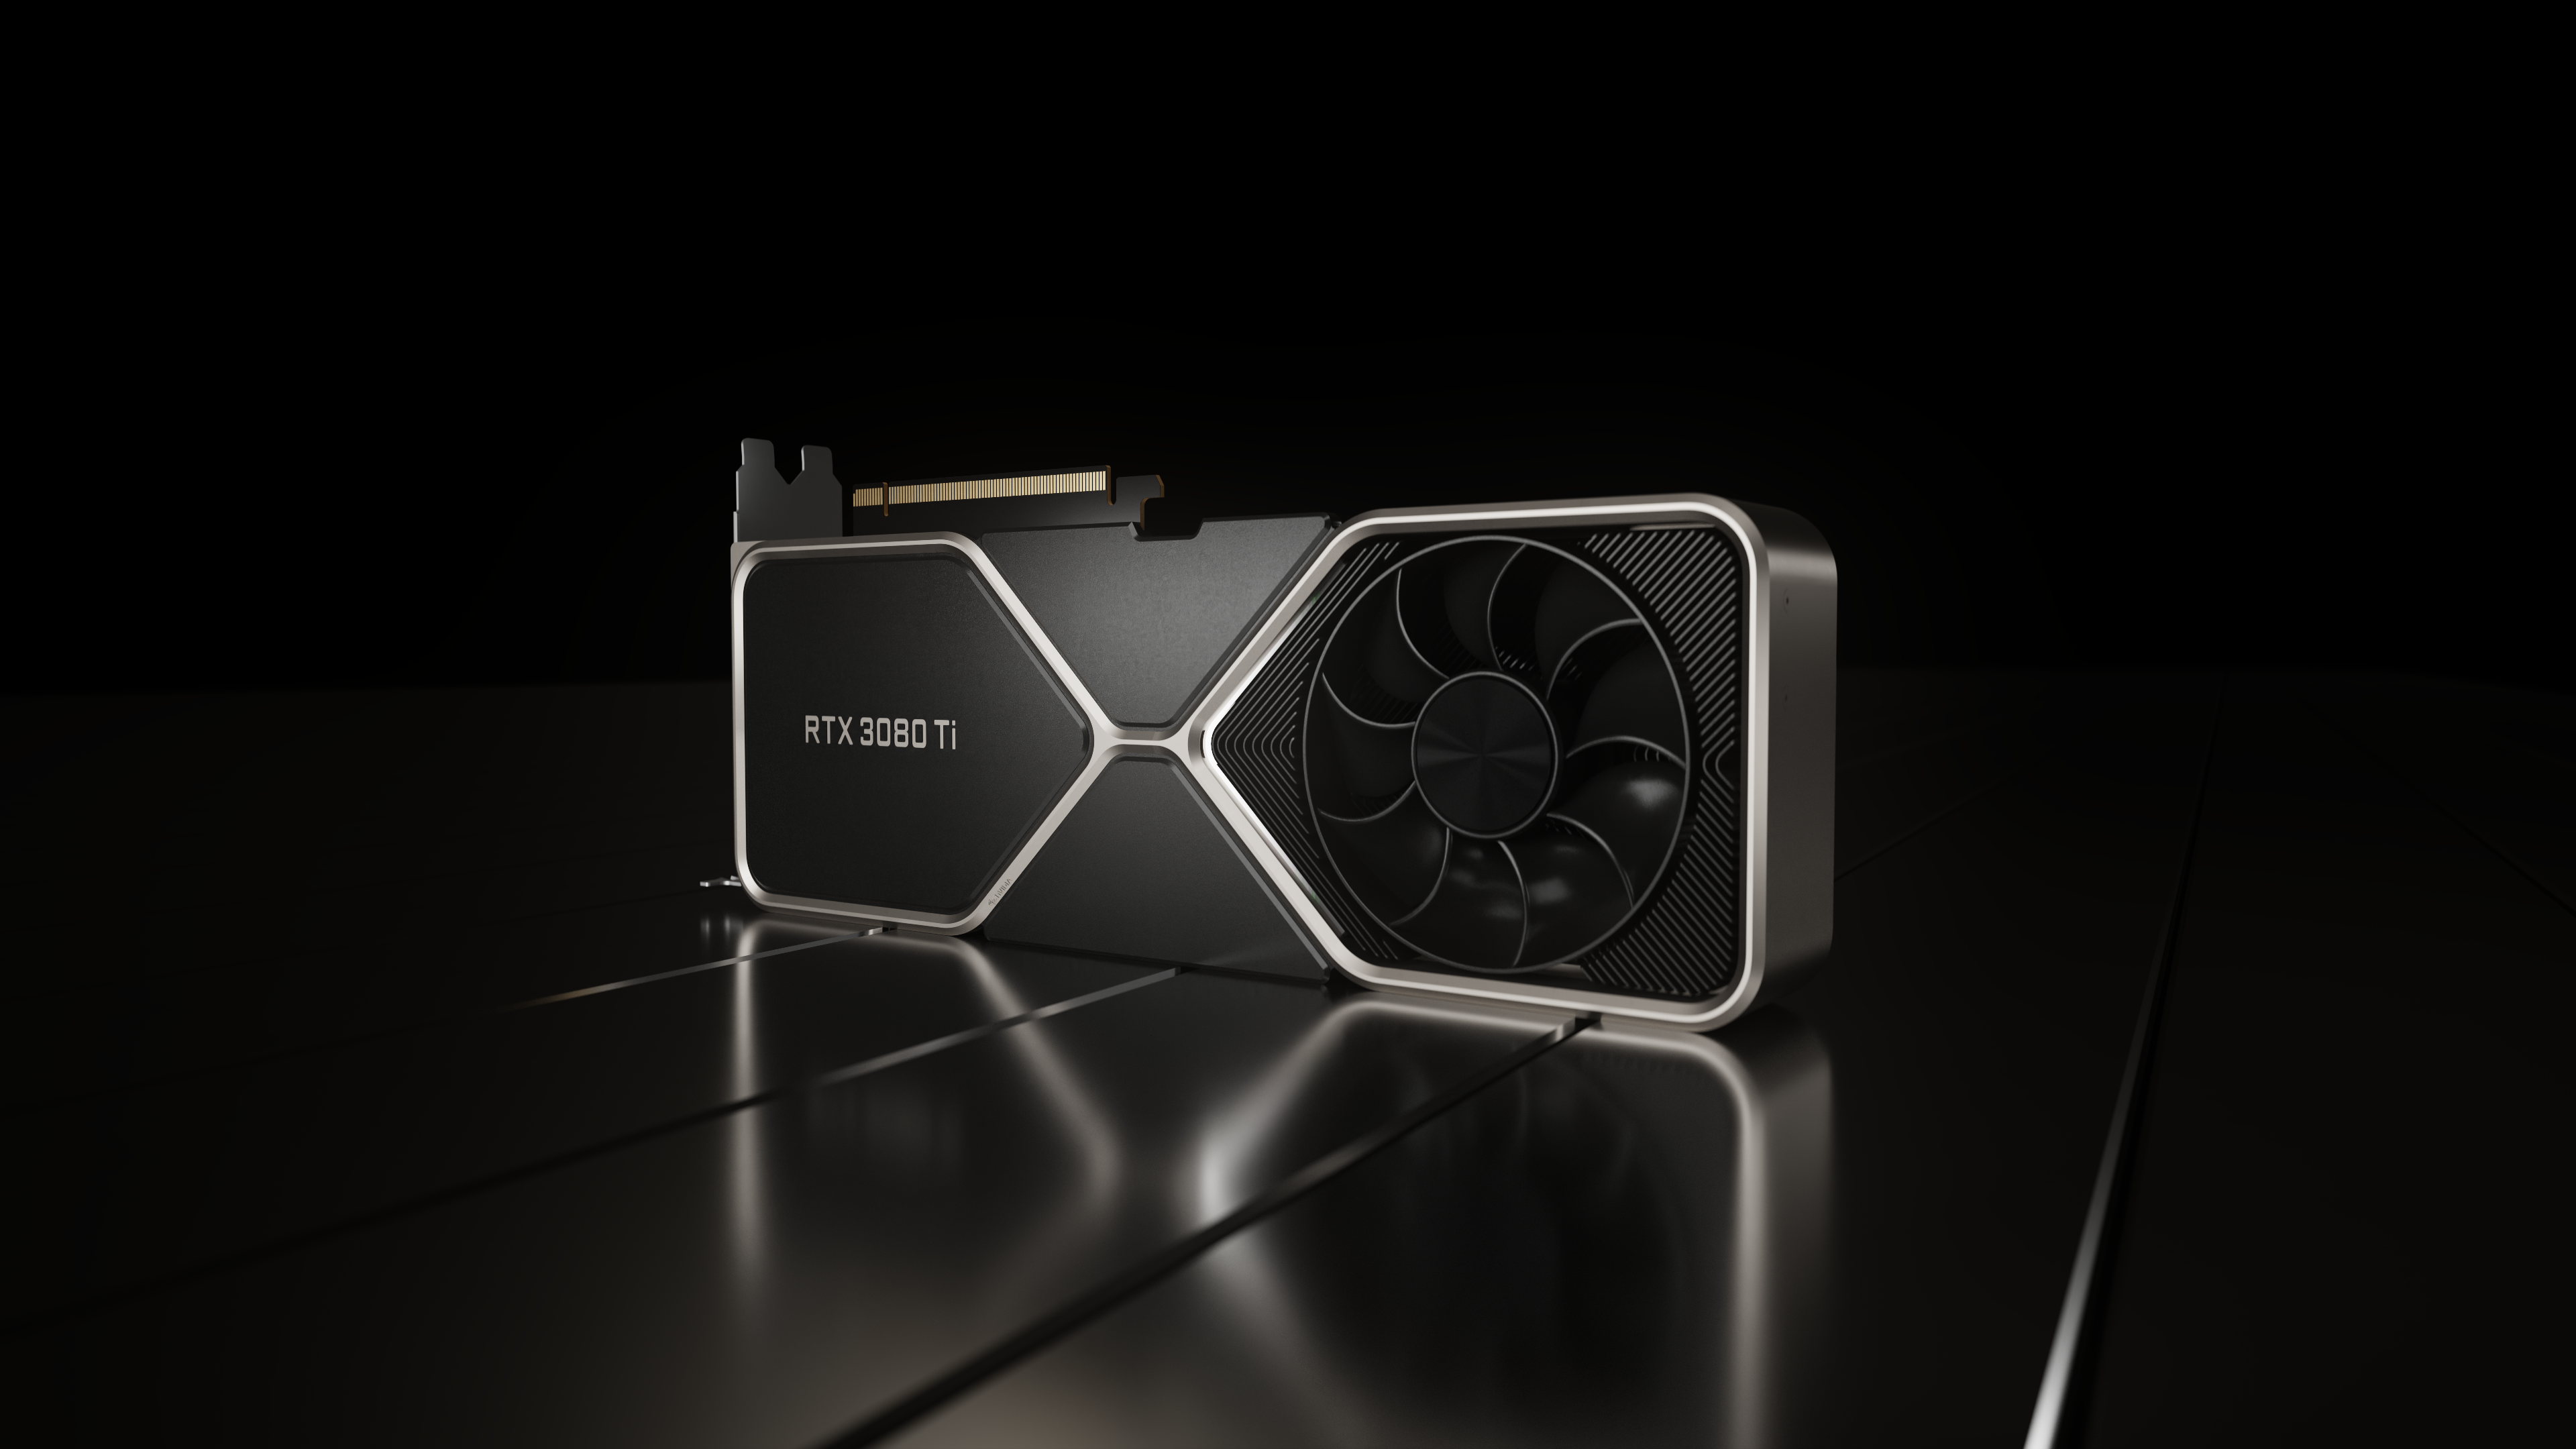 NVIDIAが新型GPU「GeForce RTX 3080 Ti／3070 Ti」を発表。『レインボーシックス シージ』『Icarus』などの大作・新作タイトルが光の表現を描写するRTX機能に対応へ_001